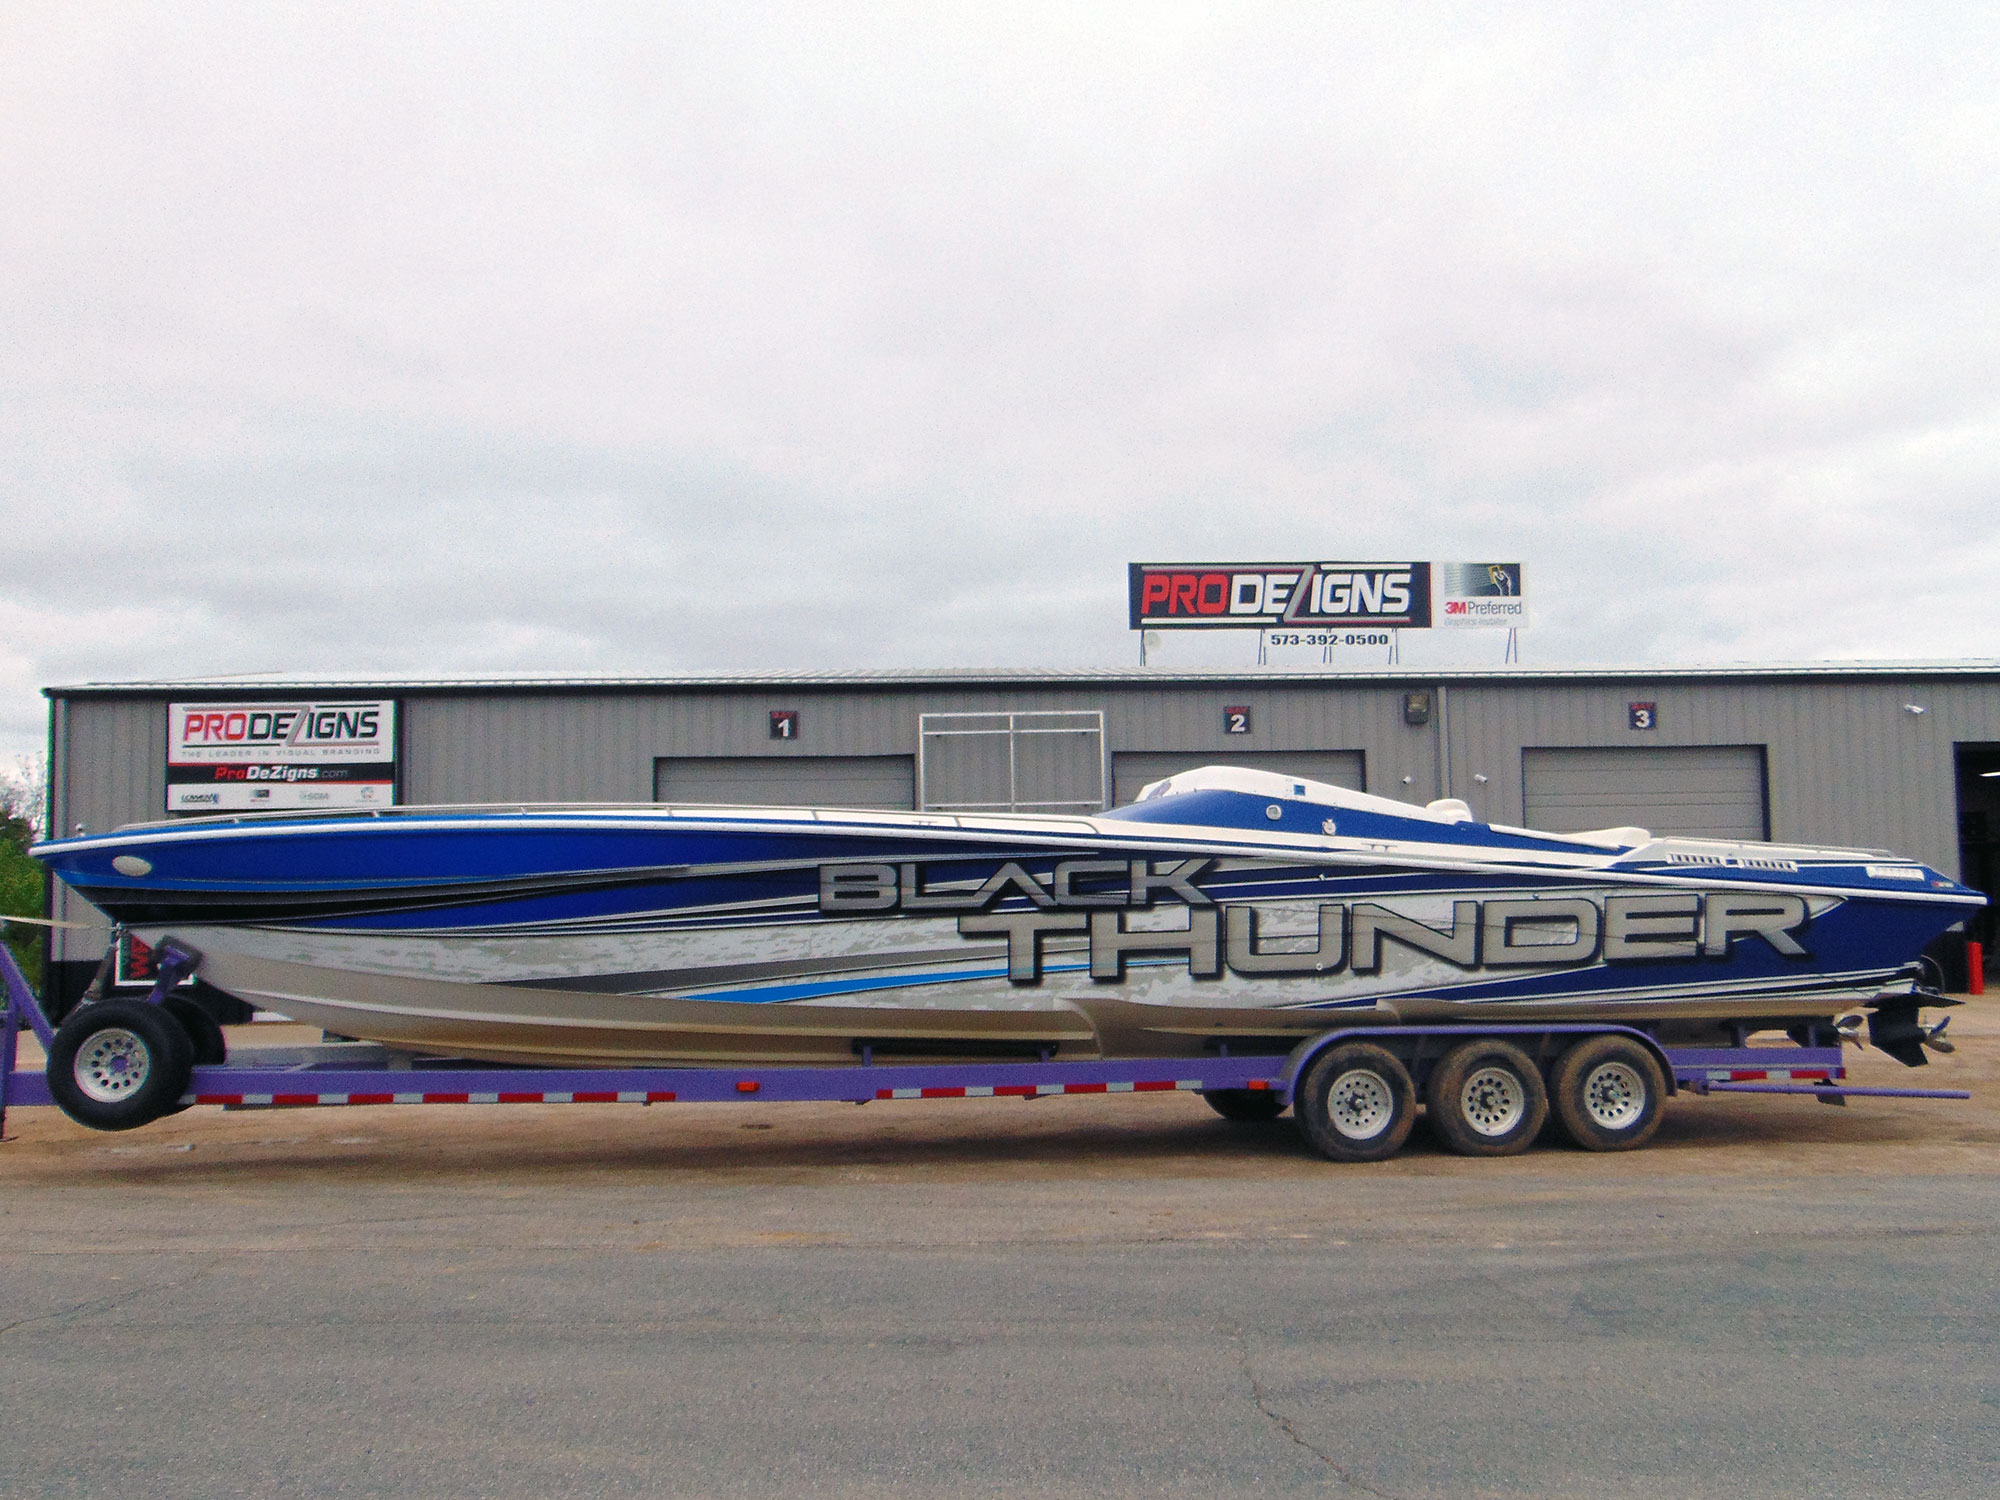 Black Thunder Boat Wrap Pro Dezigns Columbia Missouri